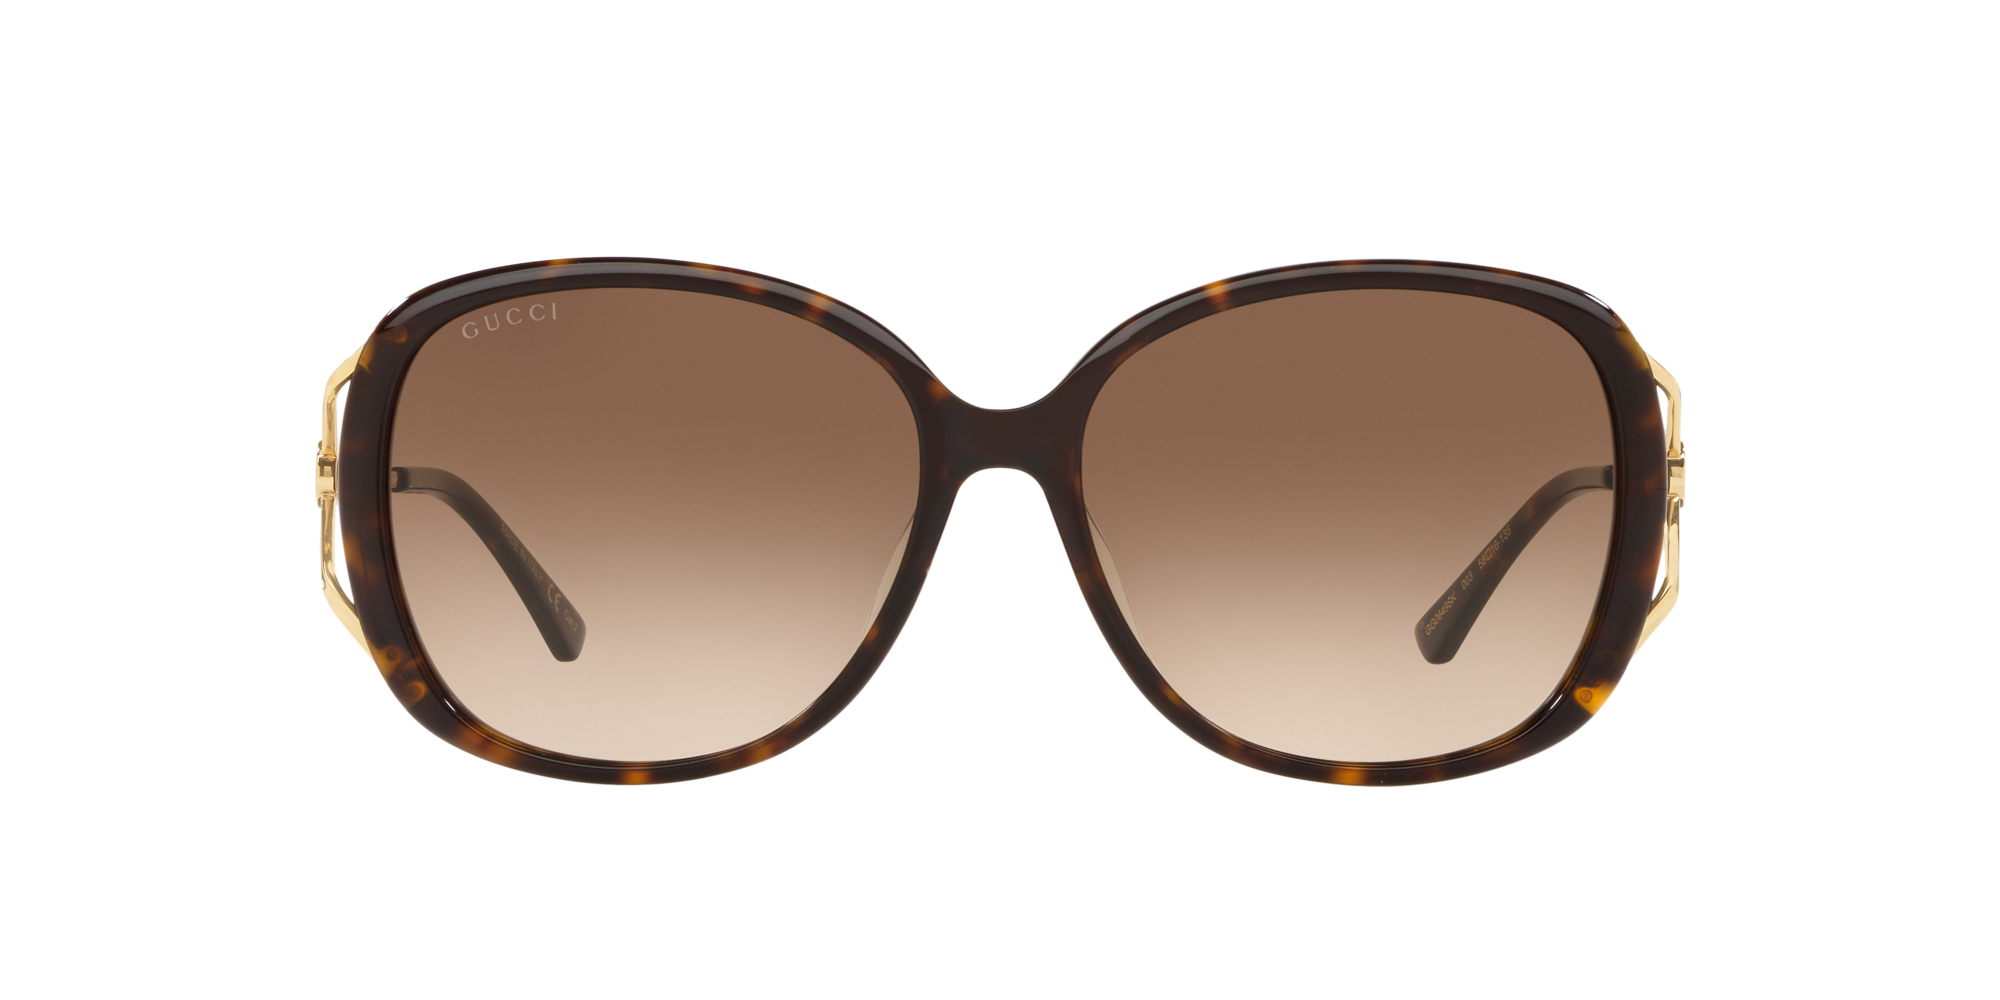 GUCCI GG0053S/001 - Sunglasses | Gucci sunglasses, Gucci sunglasses women,  Fashion sunglasses